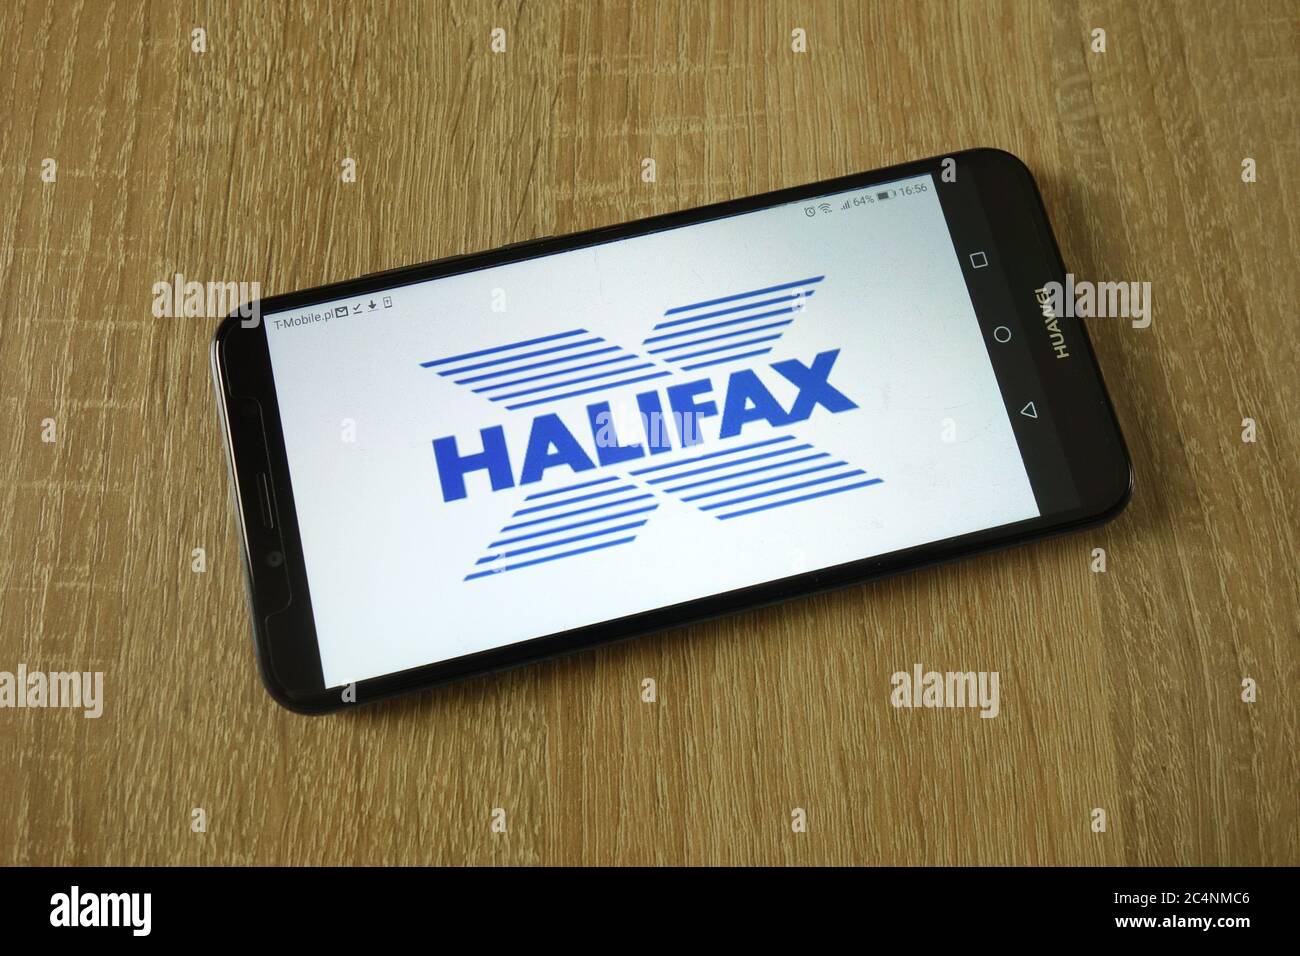 Halifax logo displayed on smartphone Stock Photo